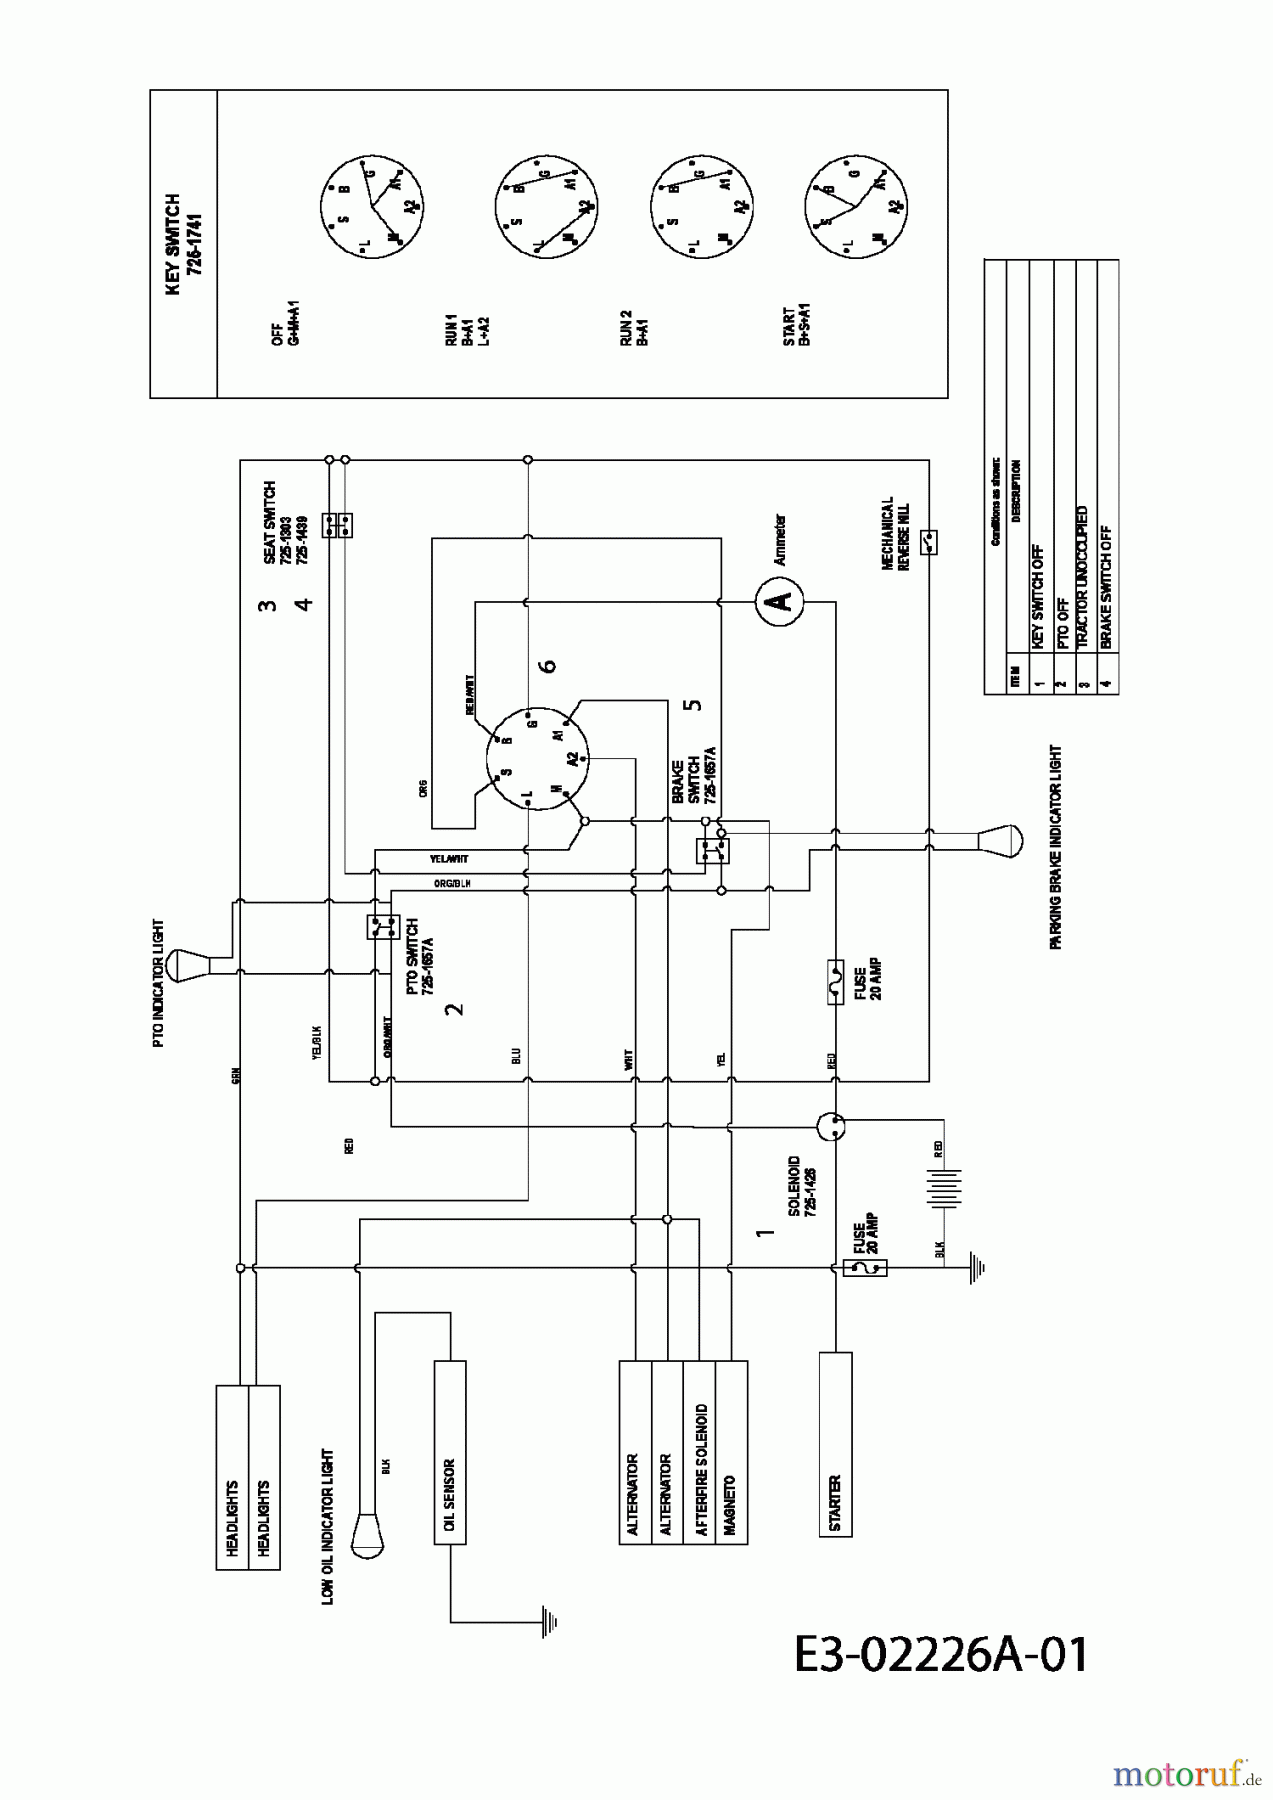  Gutbrod Lawn tractors DLX 107 SHL 13AT616G690  (2004) Wiring diagram